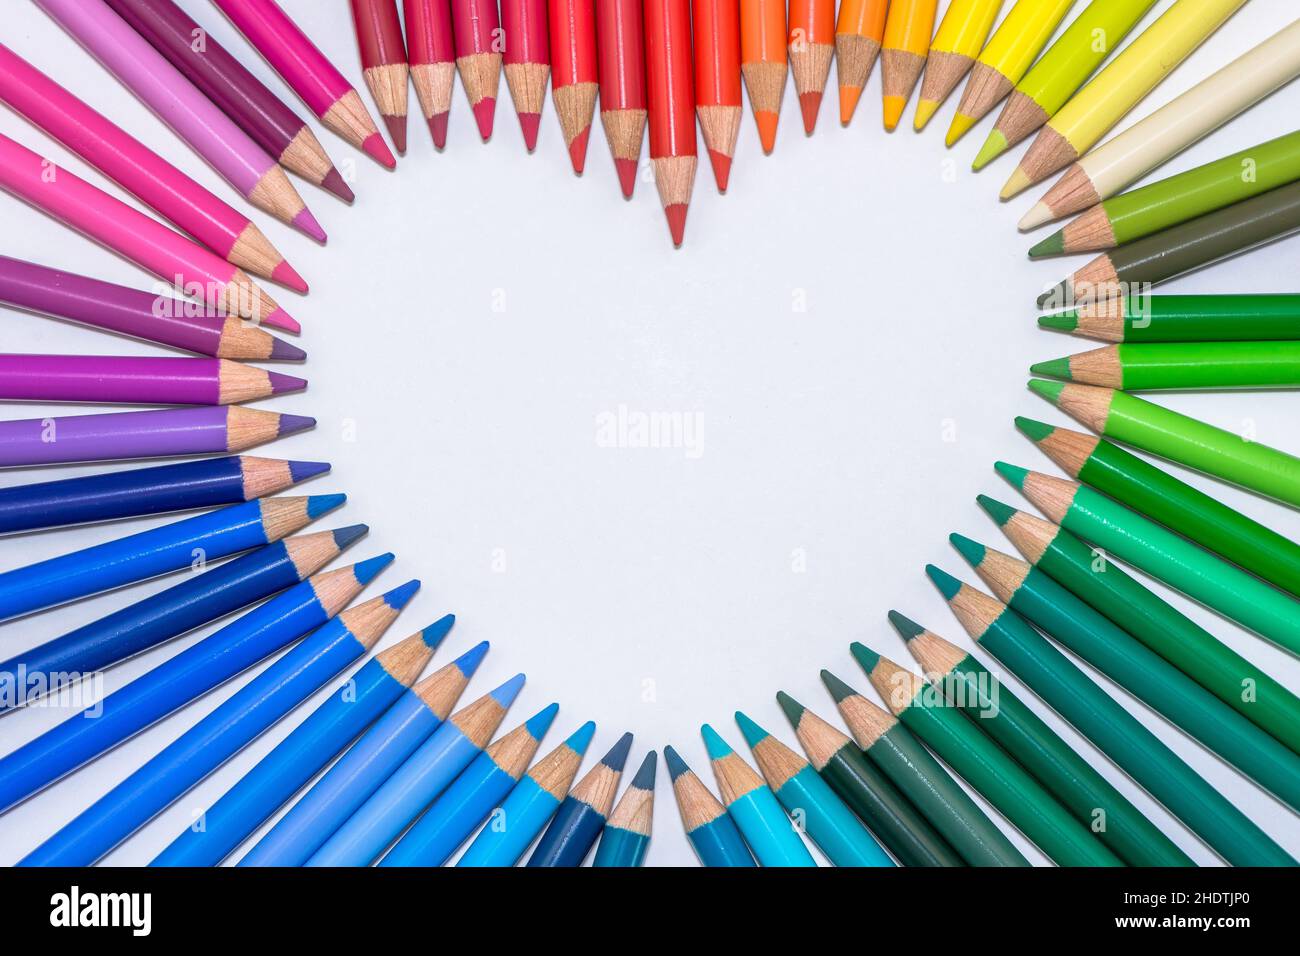 crayon, crayons Stock Photo